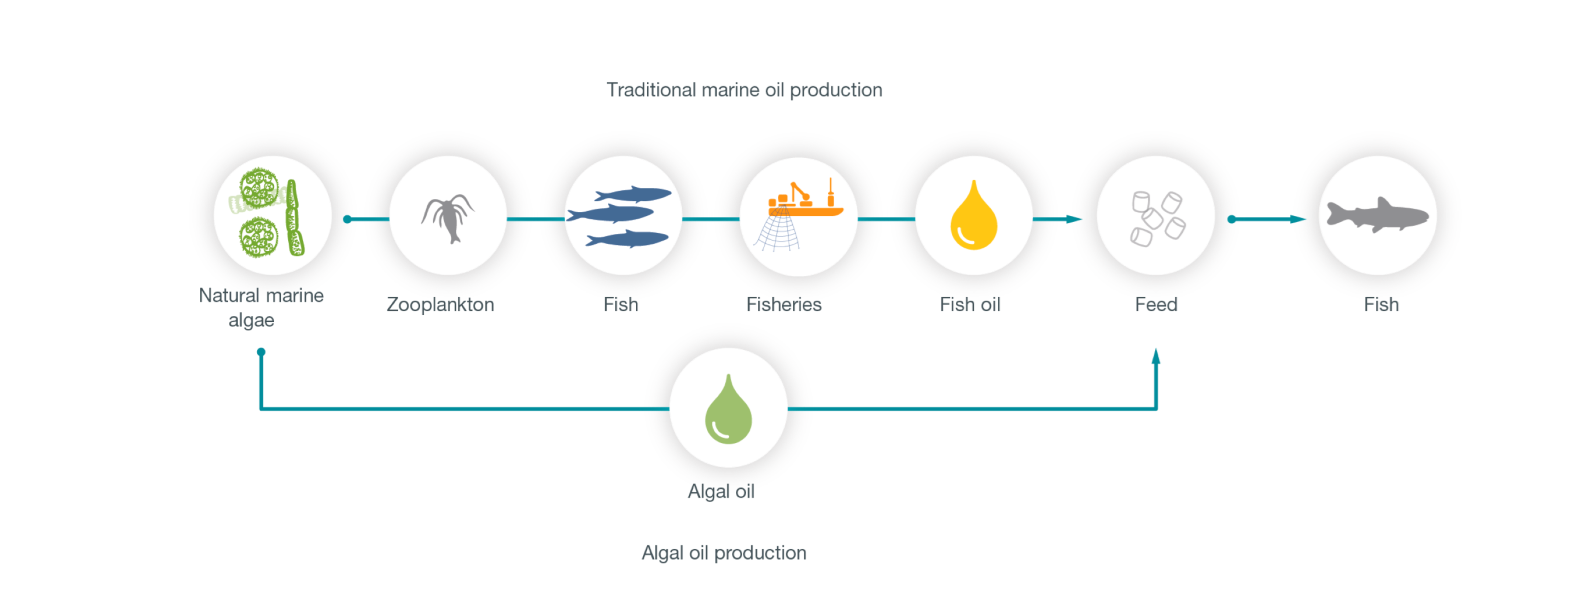 Algal oil production figure